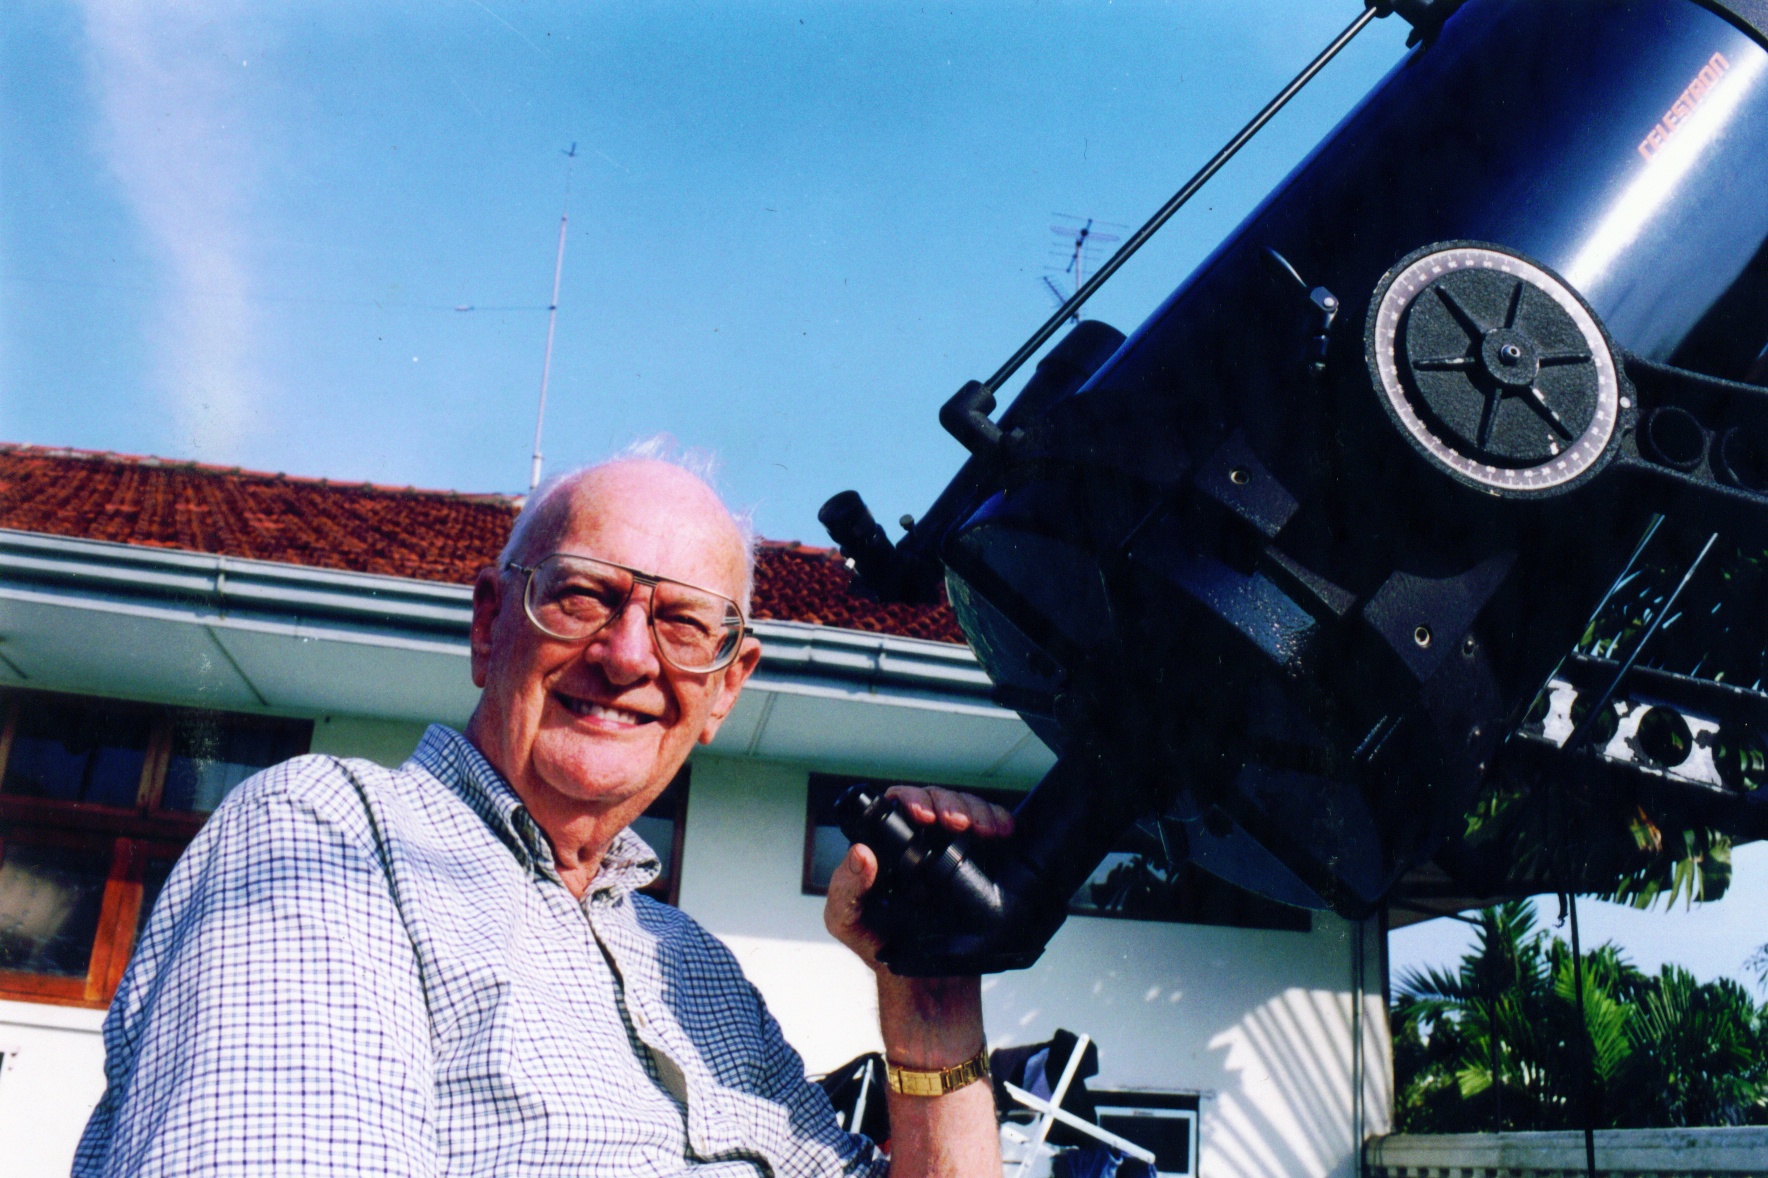 Sir Arthur Clarke with his Celestron 14-inch telescope - photo by Rohan de Silva